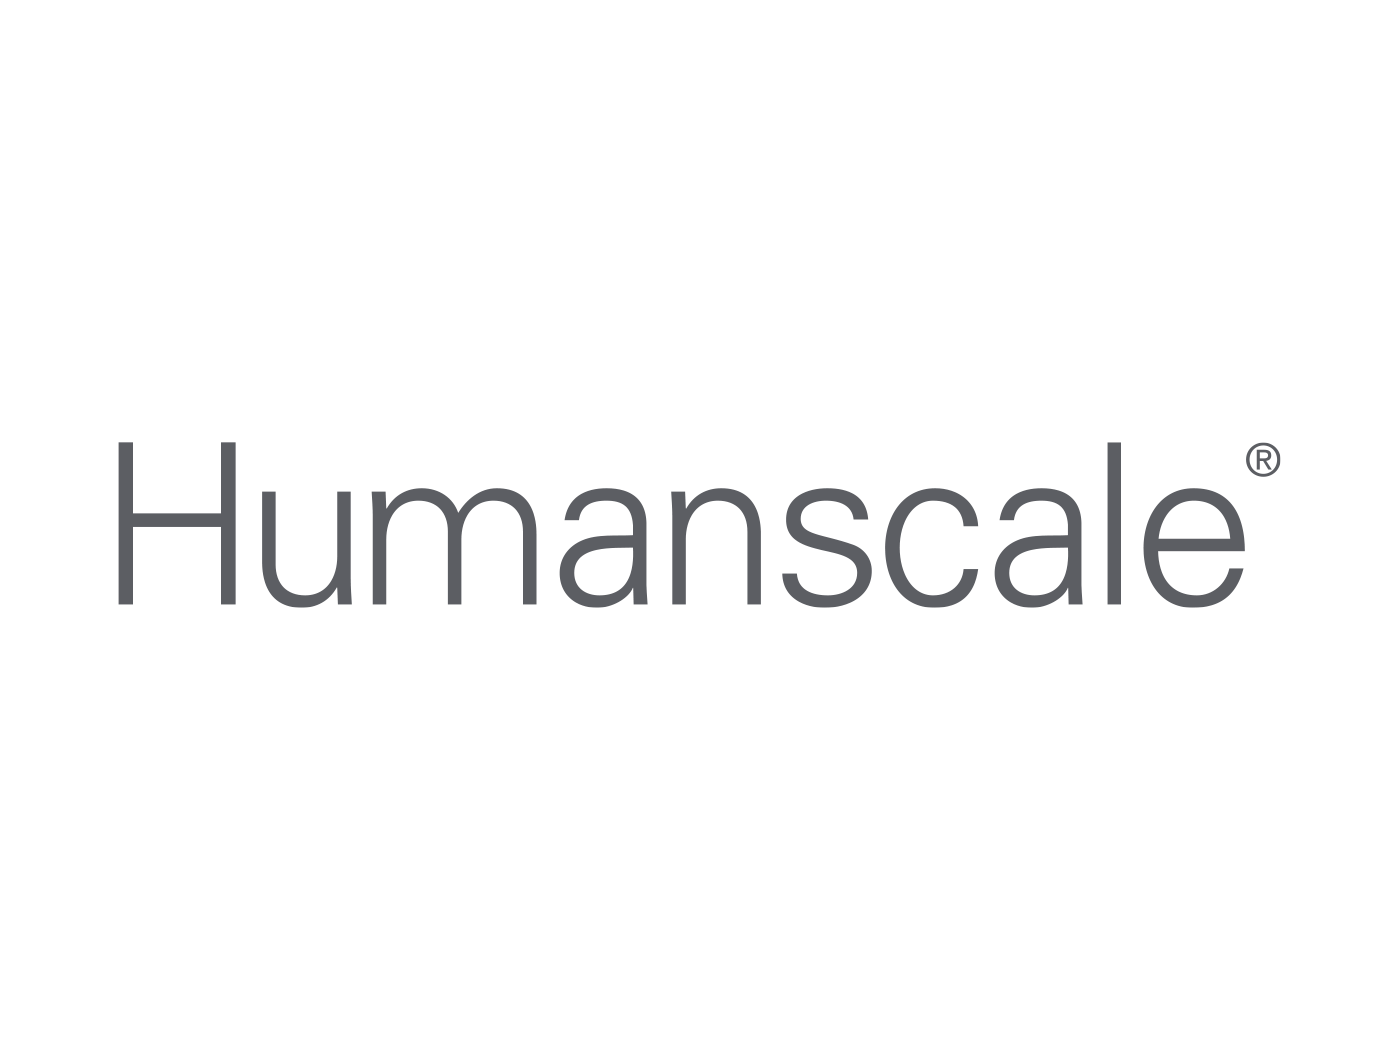 Humanscale